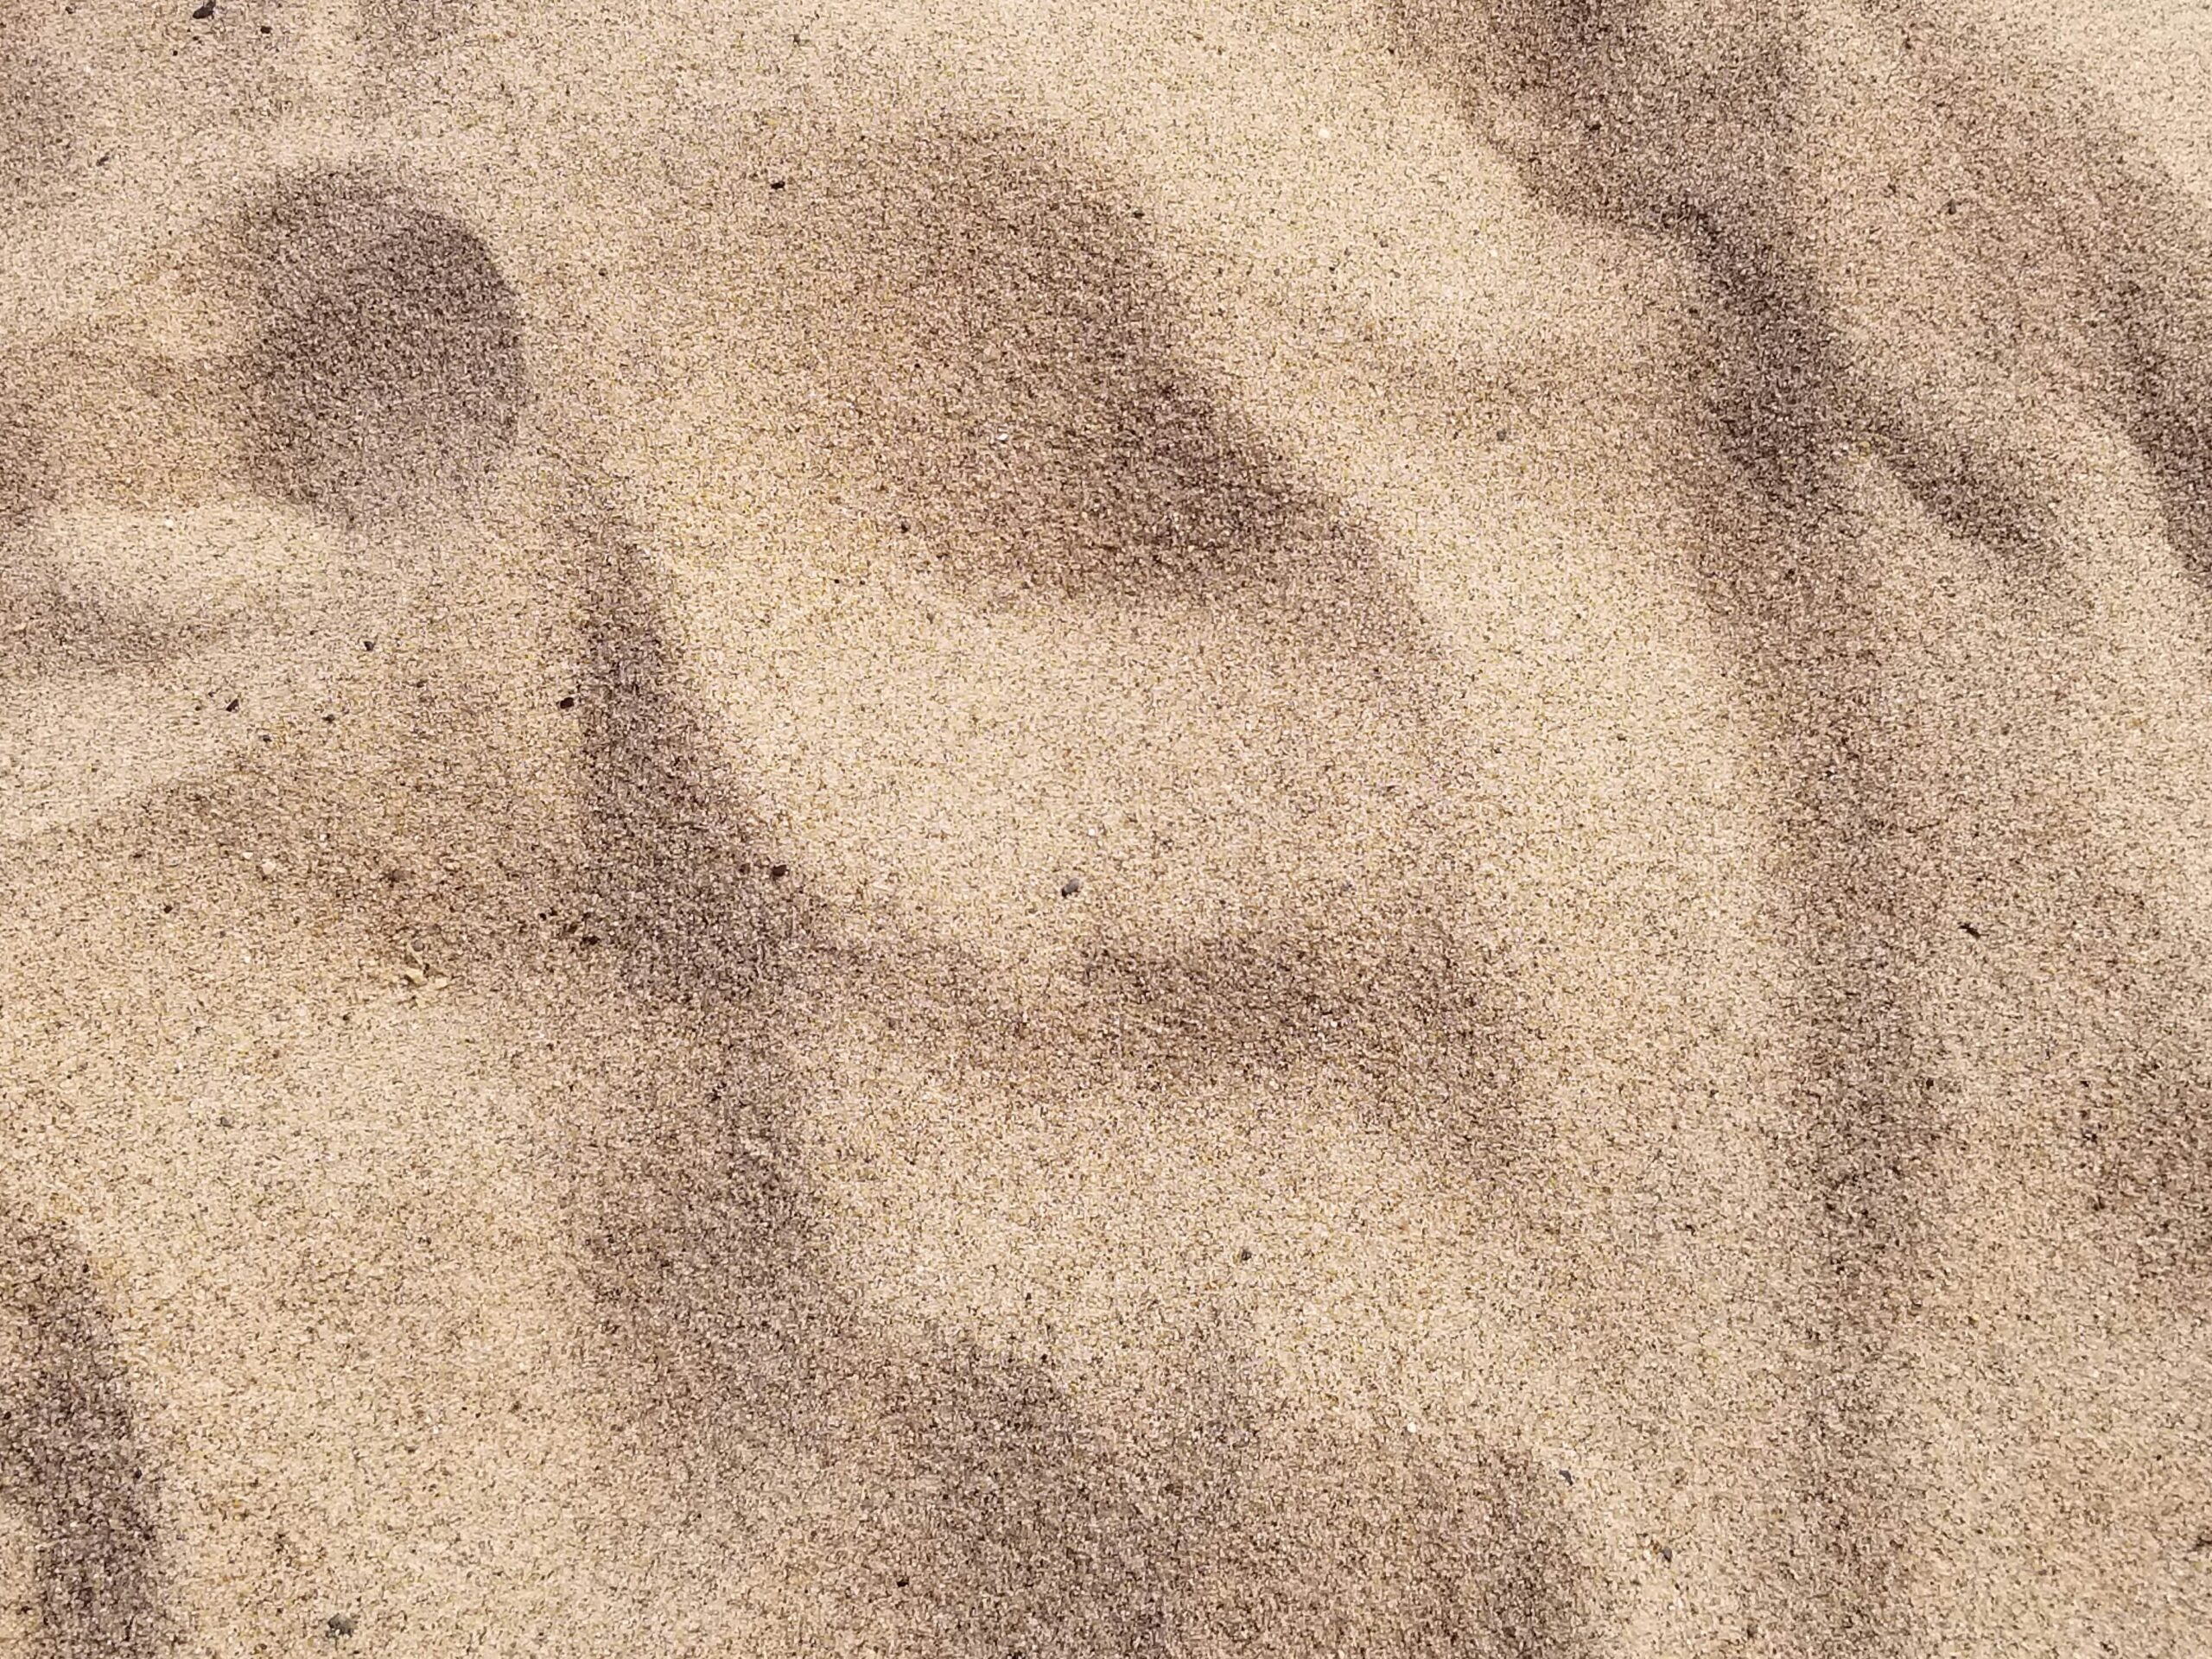 sabbia lignano sabbiadoro